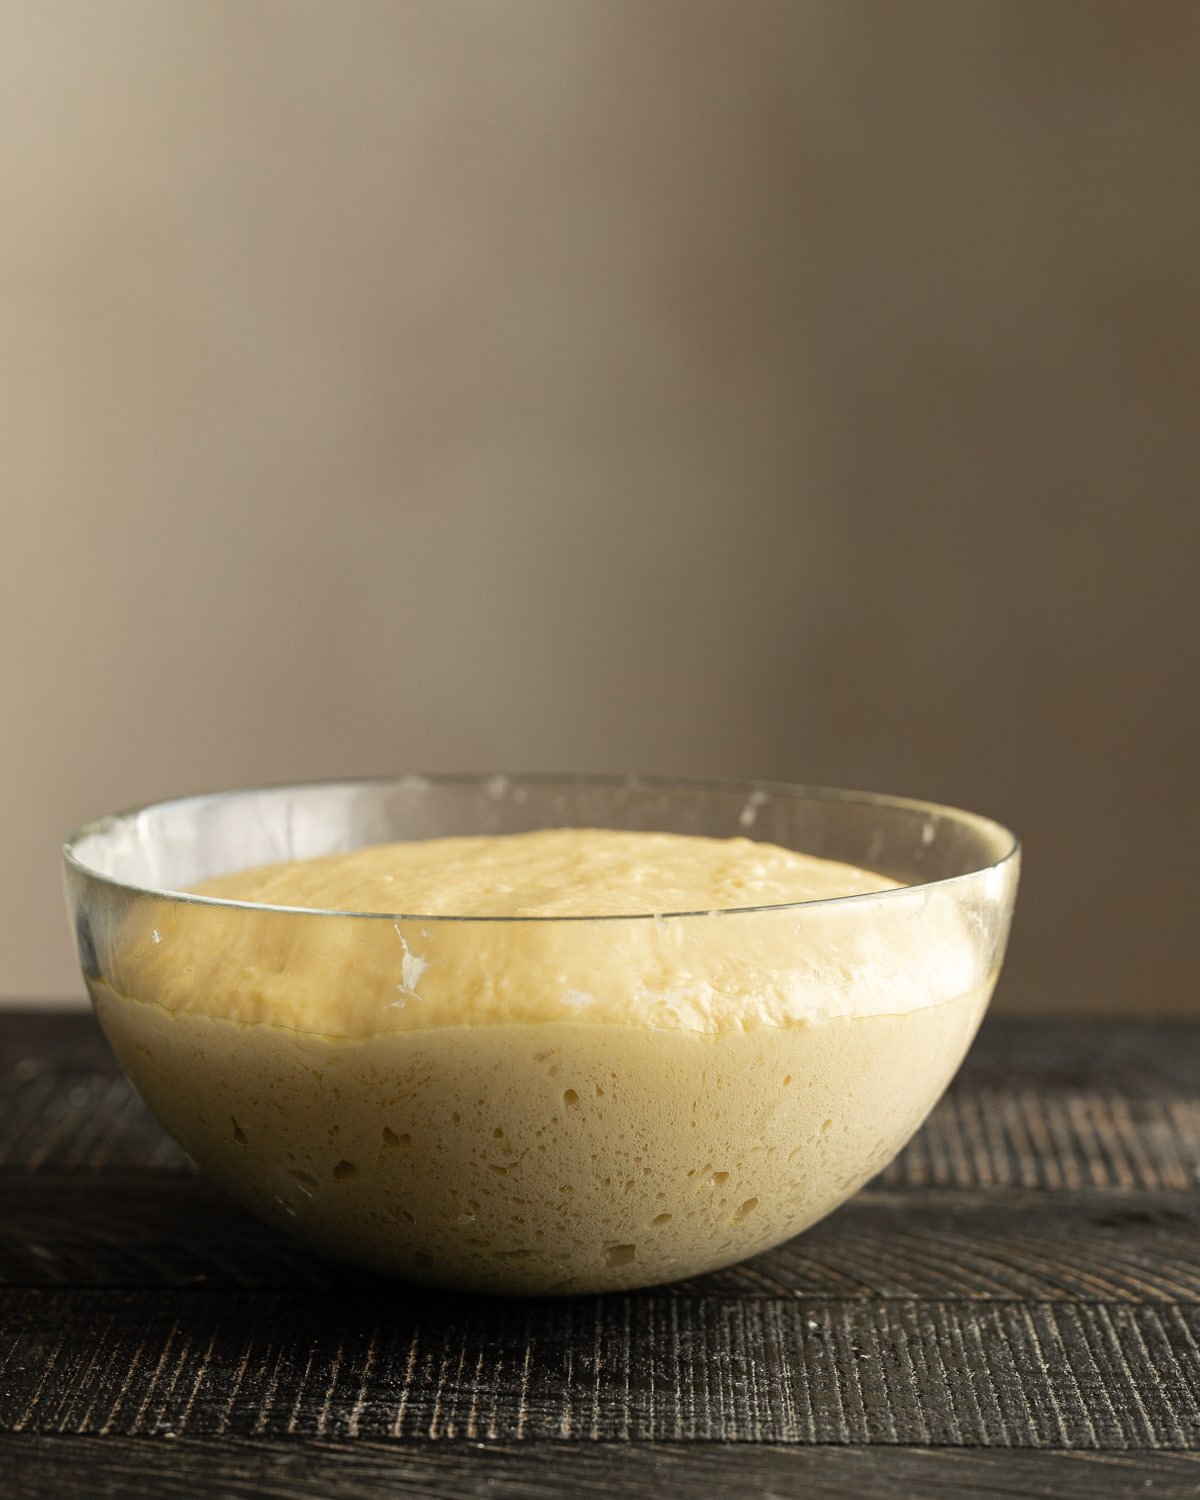 risen sourdough brioche dough inside  glass bowl